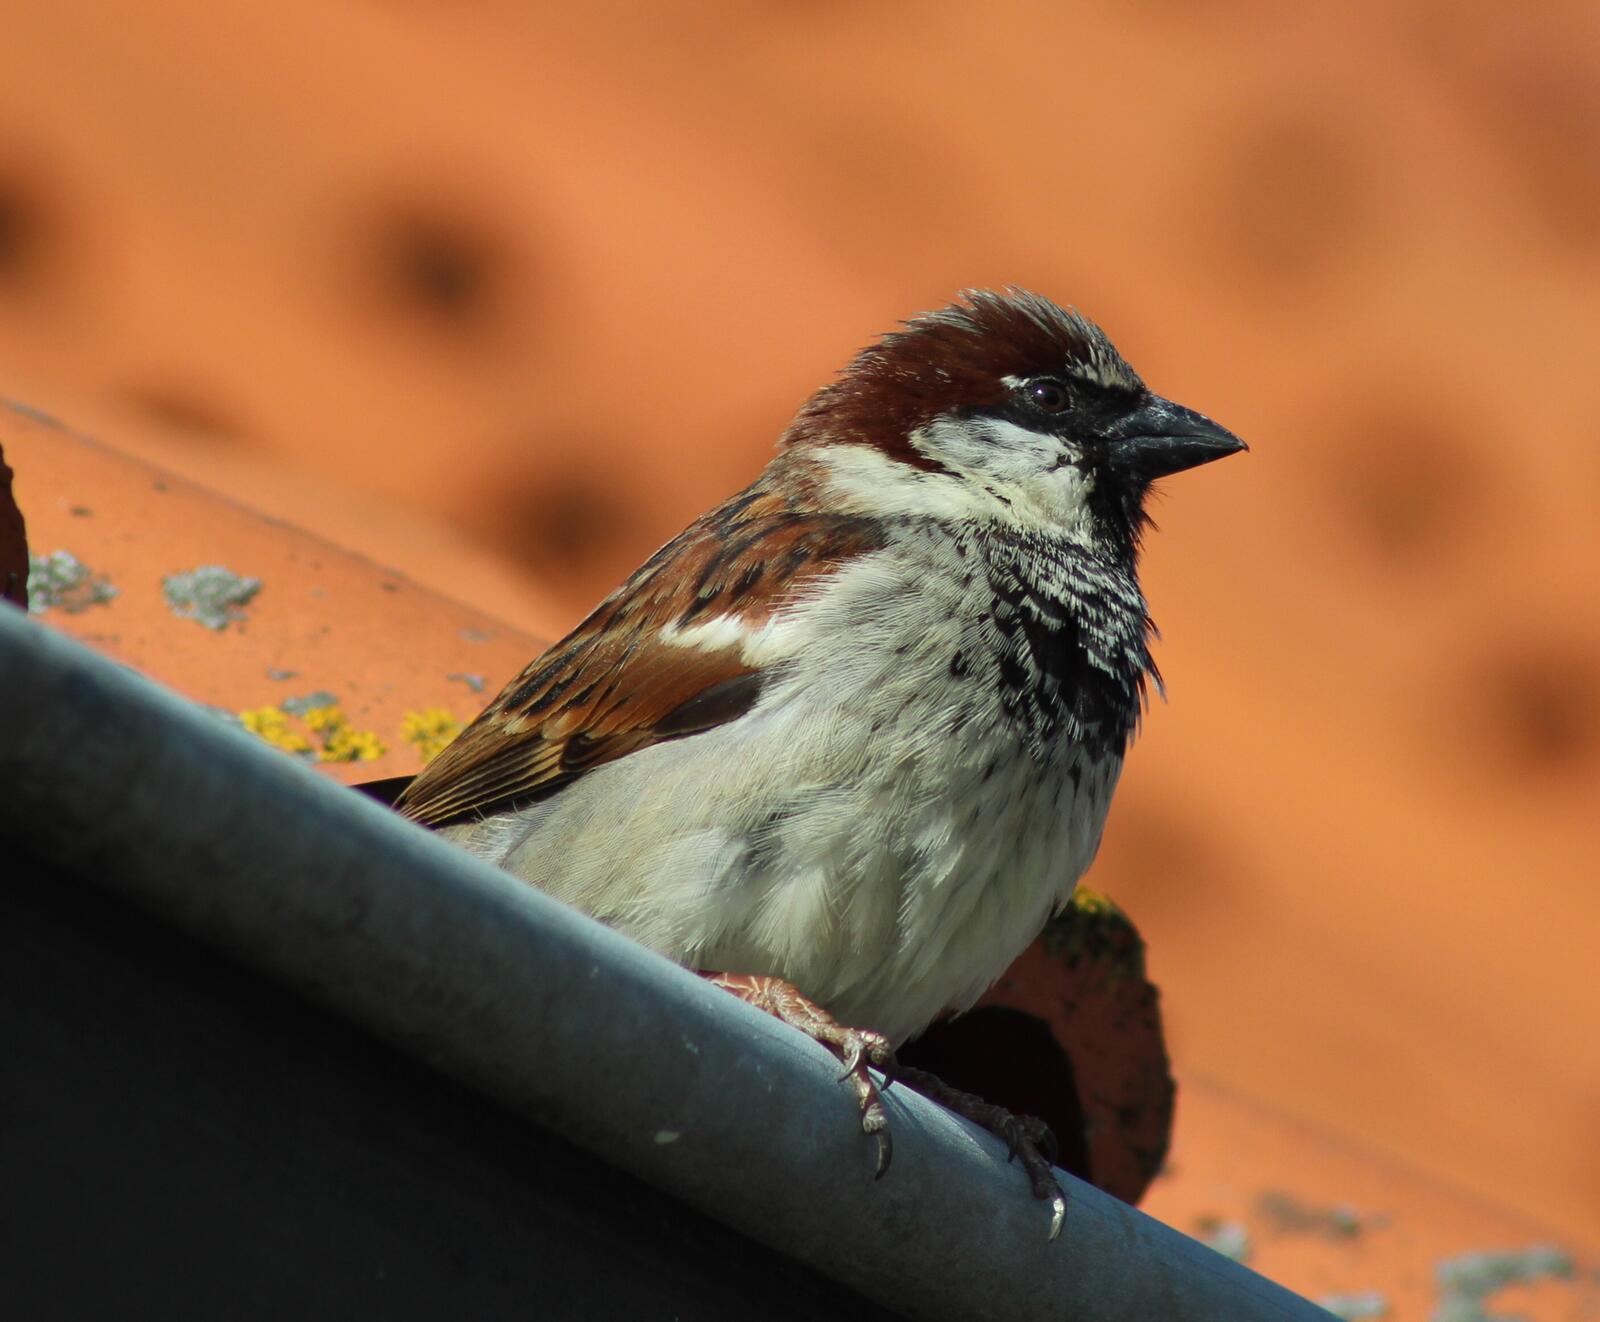 Free photo A close-up shot of a sparrow